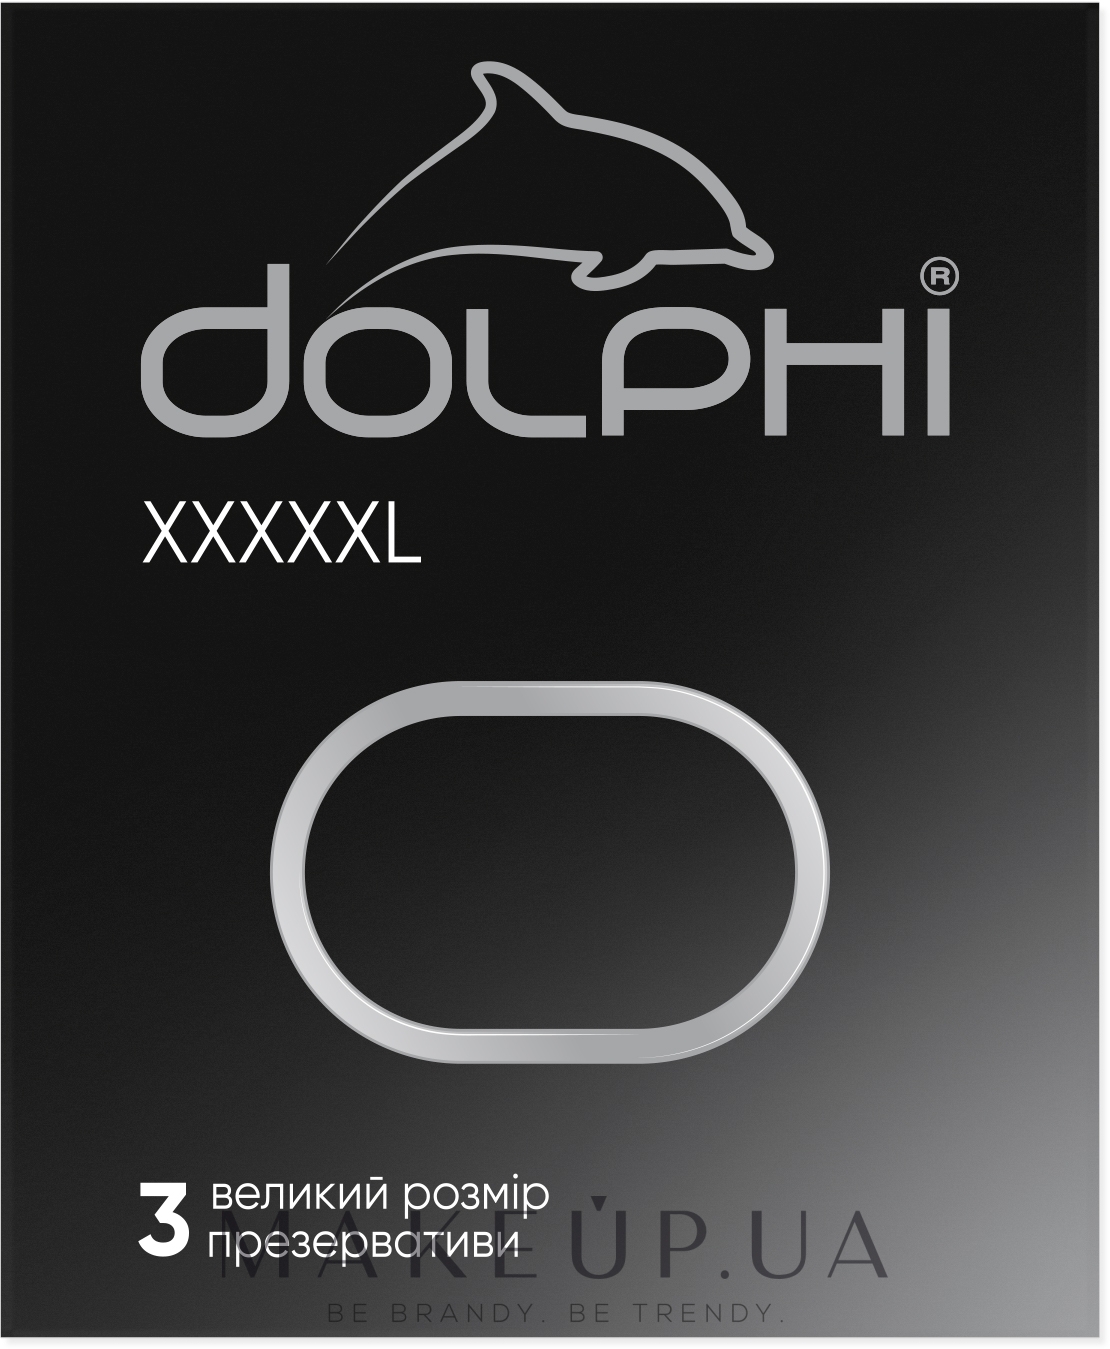 Презервативи "XXXXXL" - Dolphi — фото 3шт